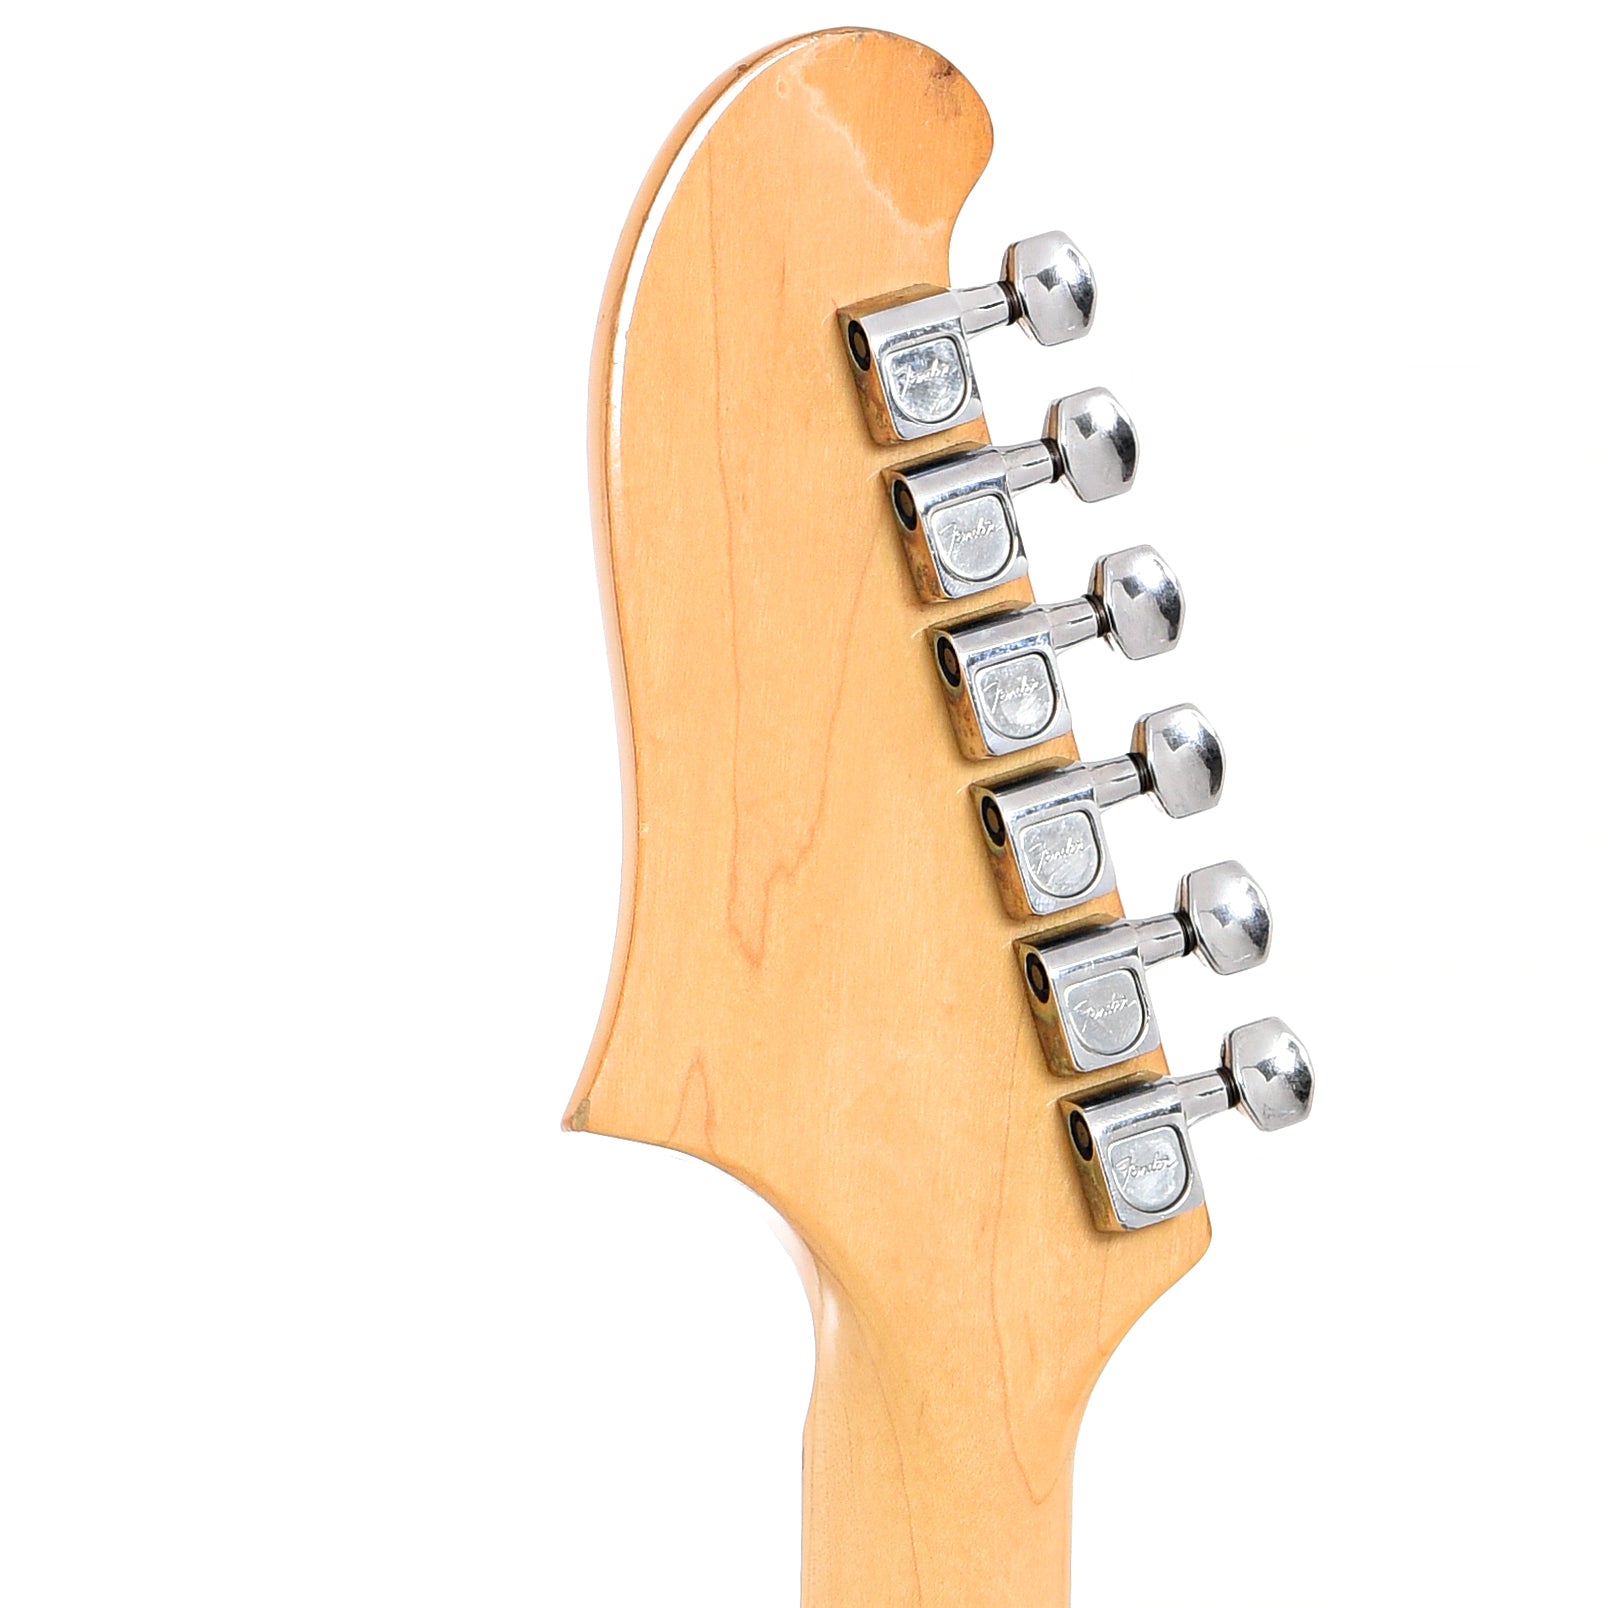 Fender Starcaster Semi-Hollowbody Electric Guitar (1975) – Elderly 